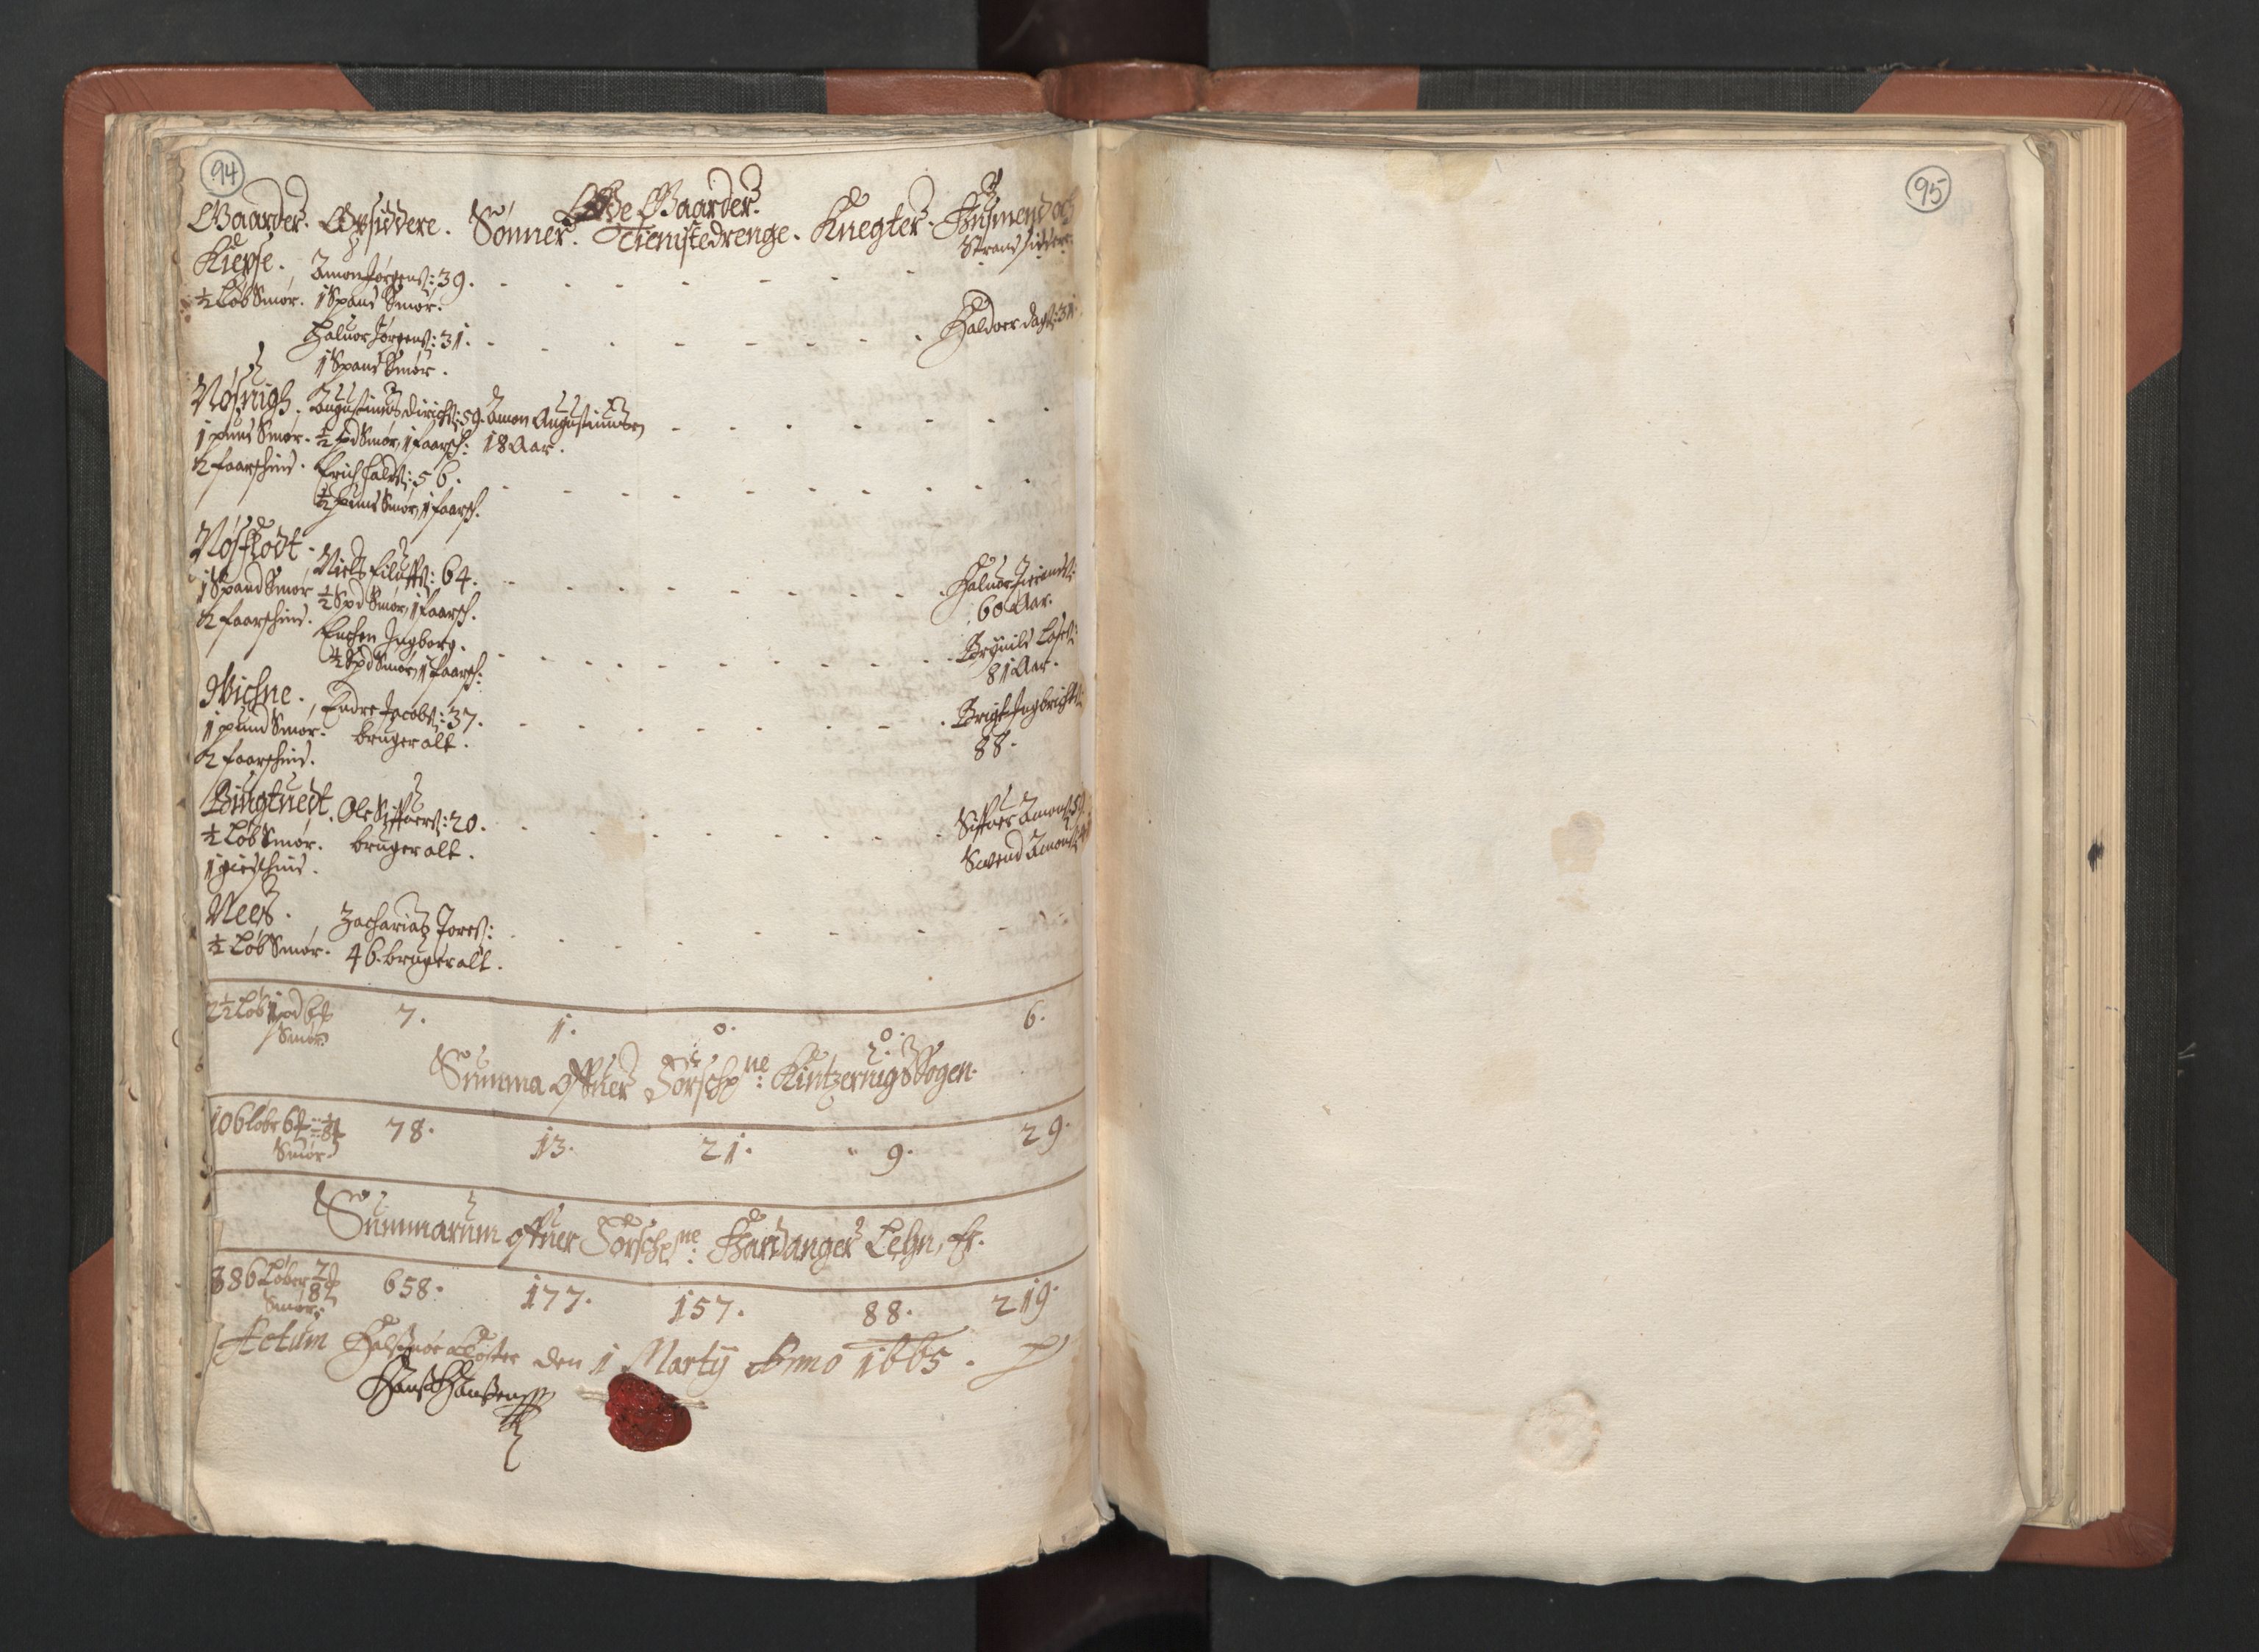 RA, Fogdenes og sorenskrivernes manntall 1664-1666, nr. 14: Hardanger len, Ytre Sogn fogderi og Indre Sogn fogderi, 1664-1665, s. 94-95